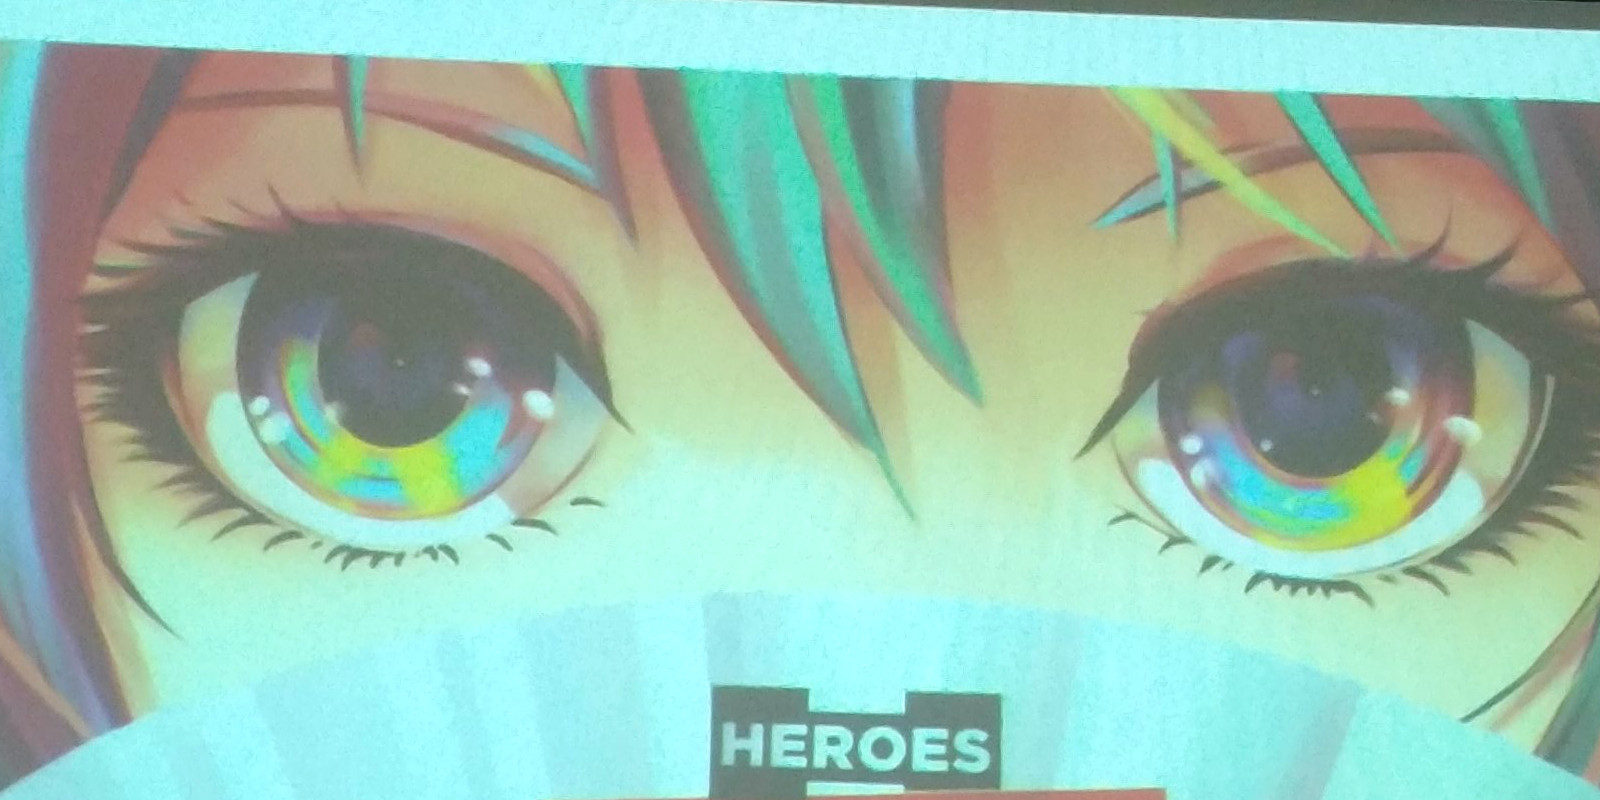 Heroes Manga Madrid se presenta en una rueda de prensa